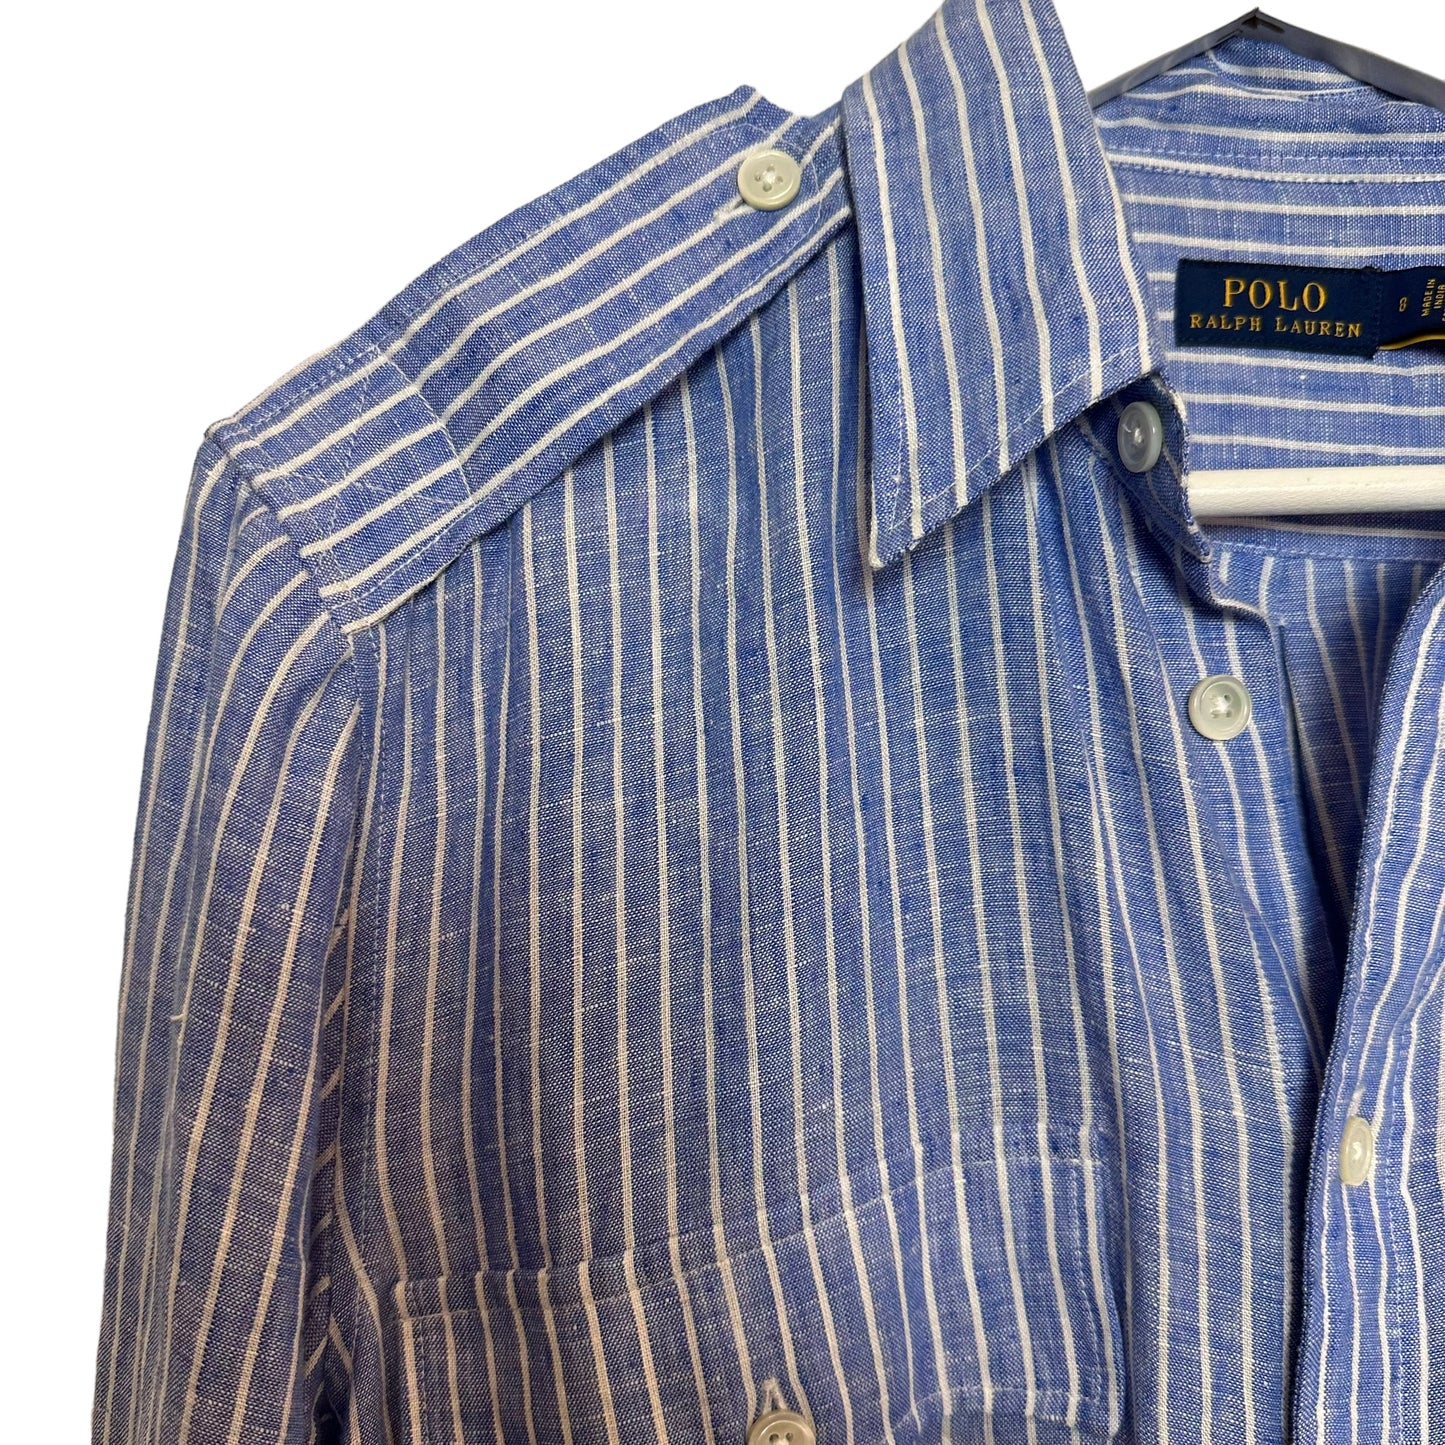 Polo Ralph Lauren Linen Shirtdress Midi Long Sleeve Blue and White Striped 8